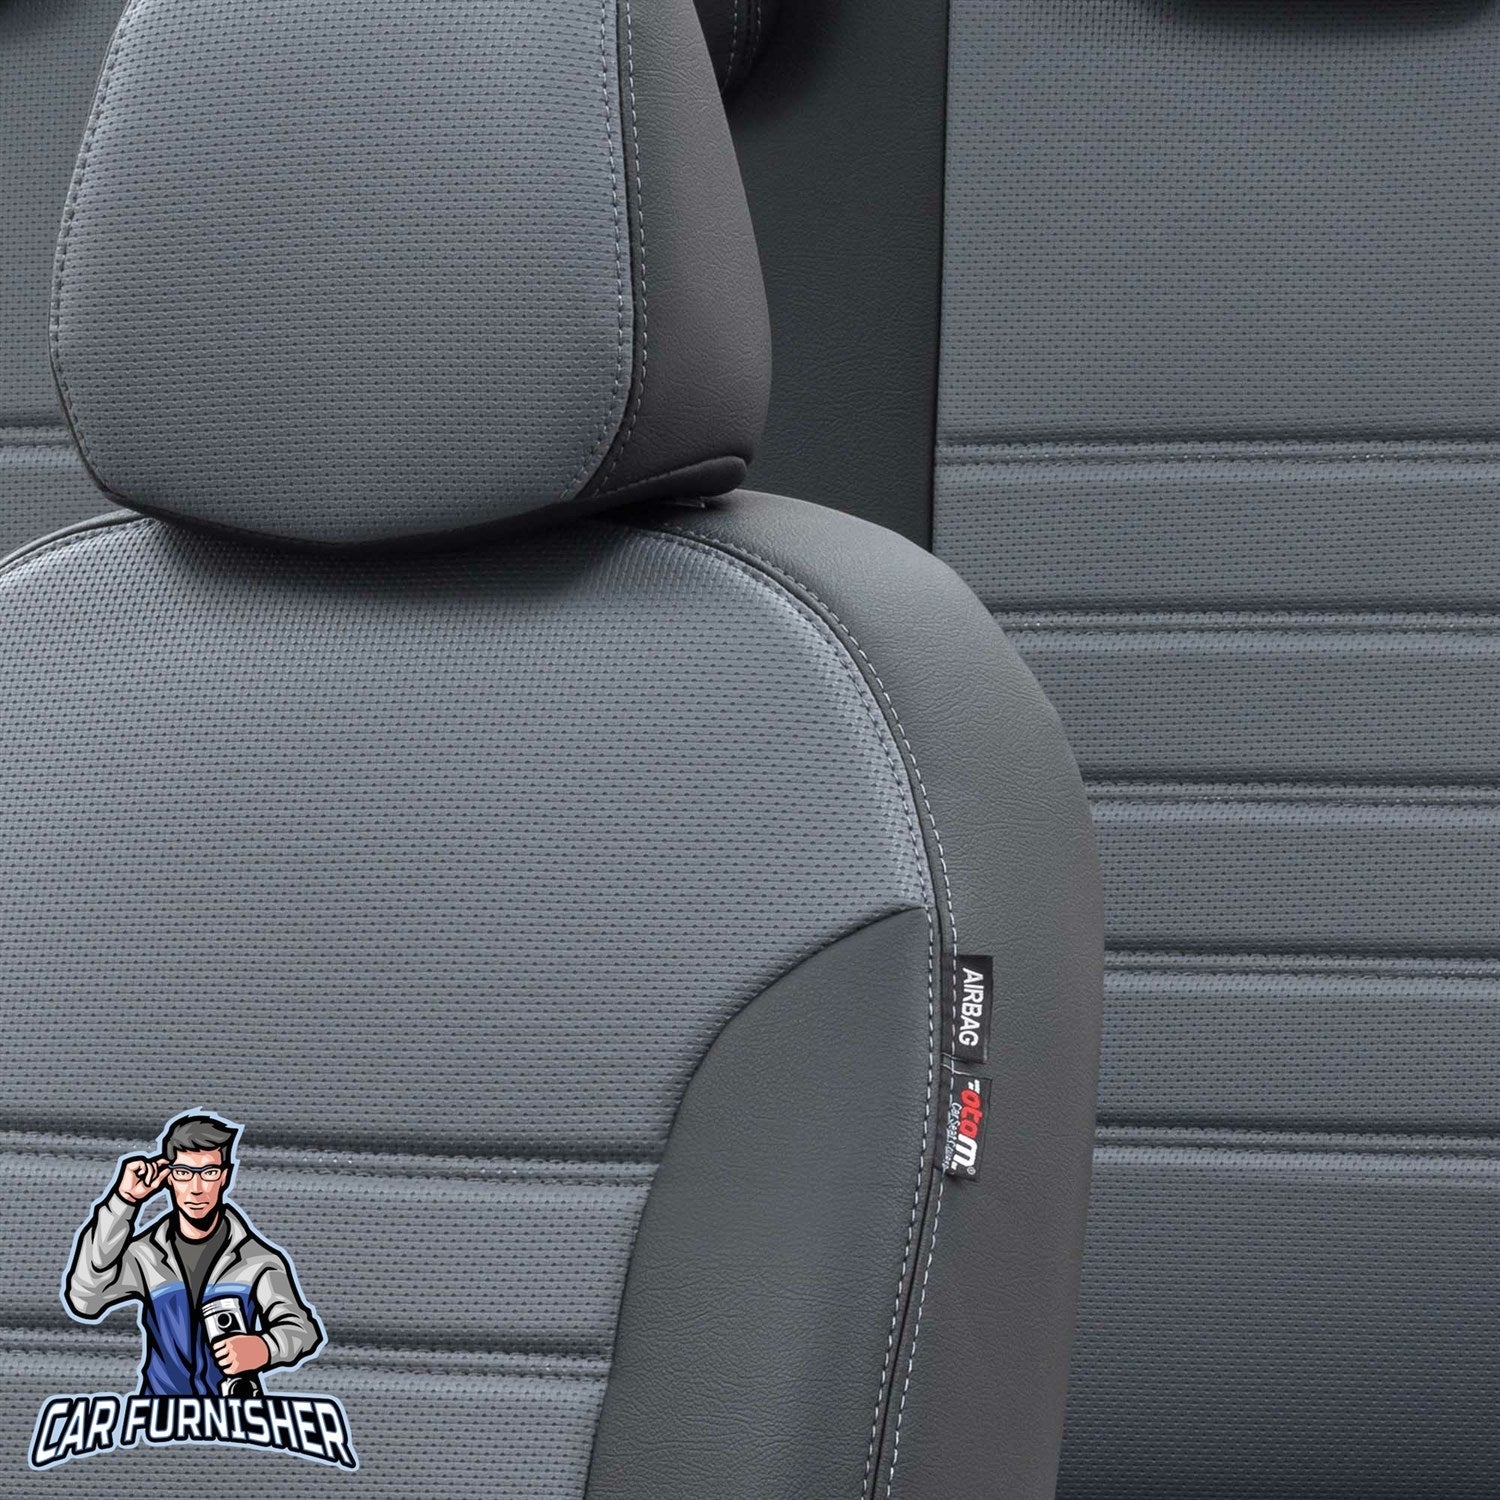 Bmw X1 Car Seat Cover 2009-2019 E84/F48 Custom New York Design Smoked Black Full Set (5 Seats + Handrest) Leather & Fabric